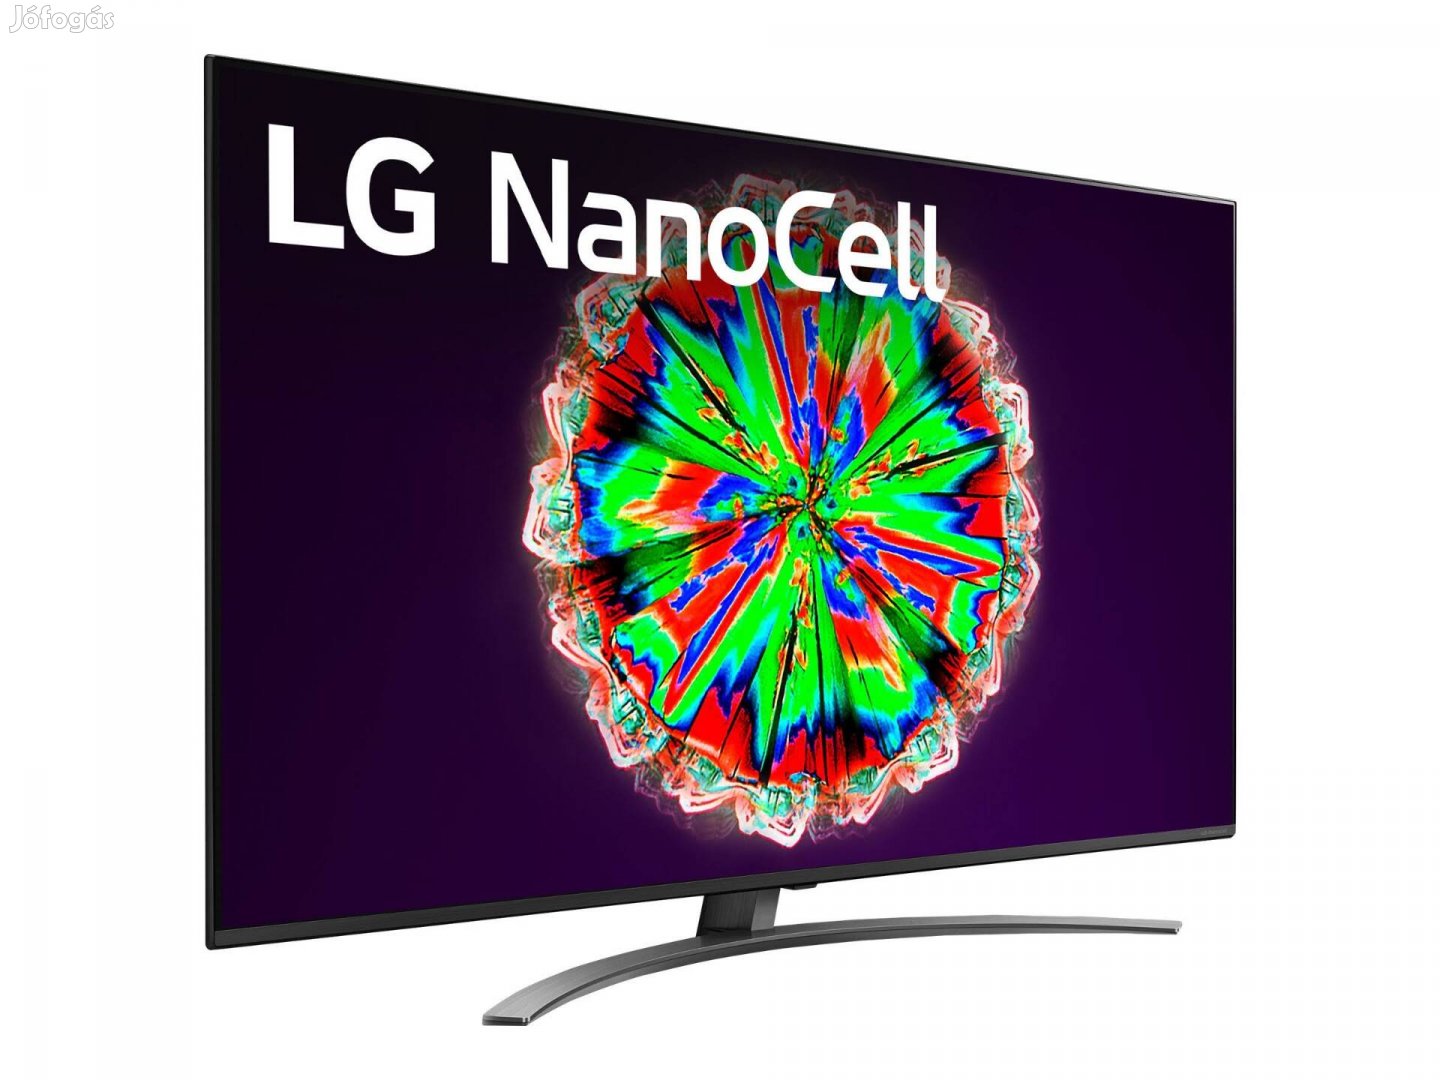 LG Nanocell 65'' Nano81 4K TV HDR Smart (165 cm)